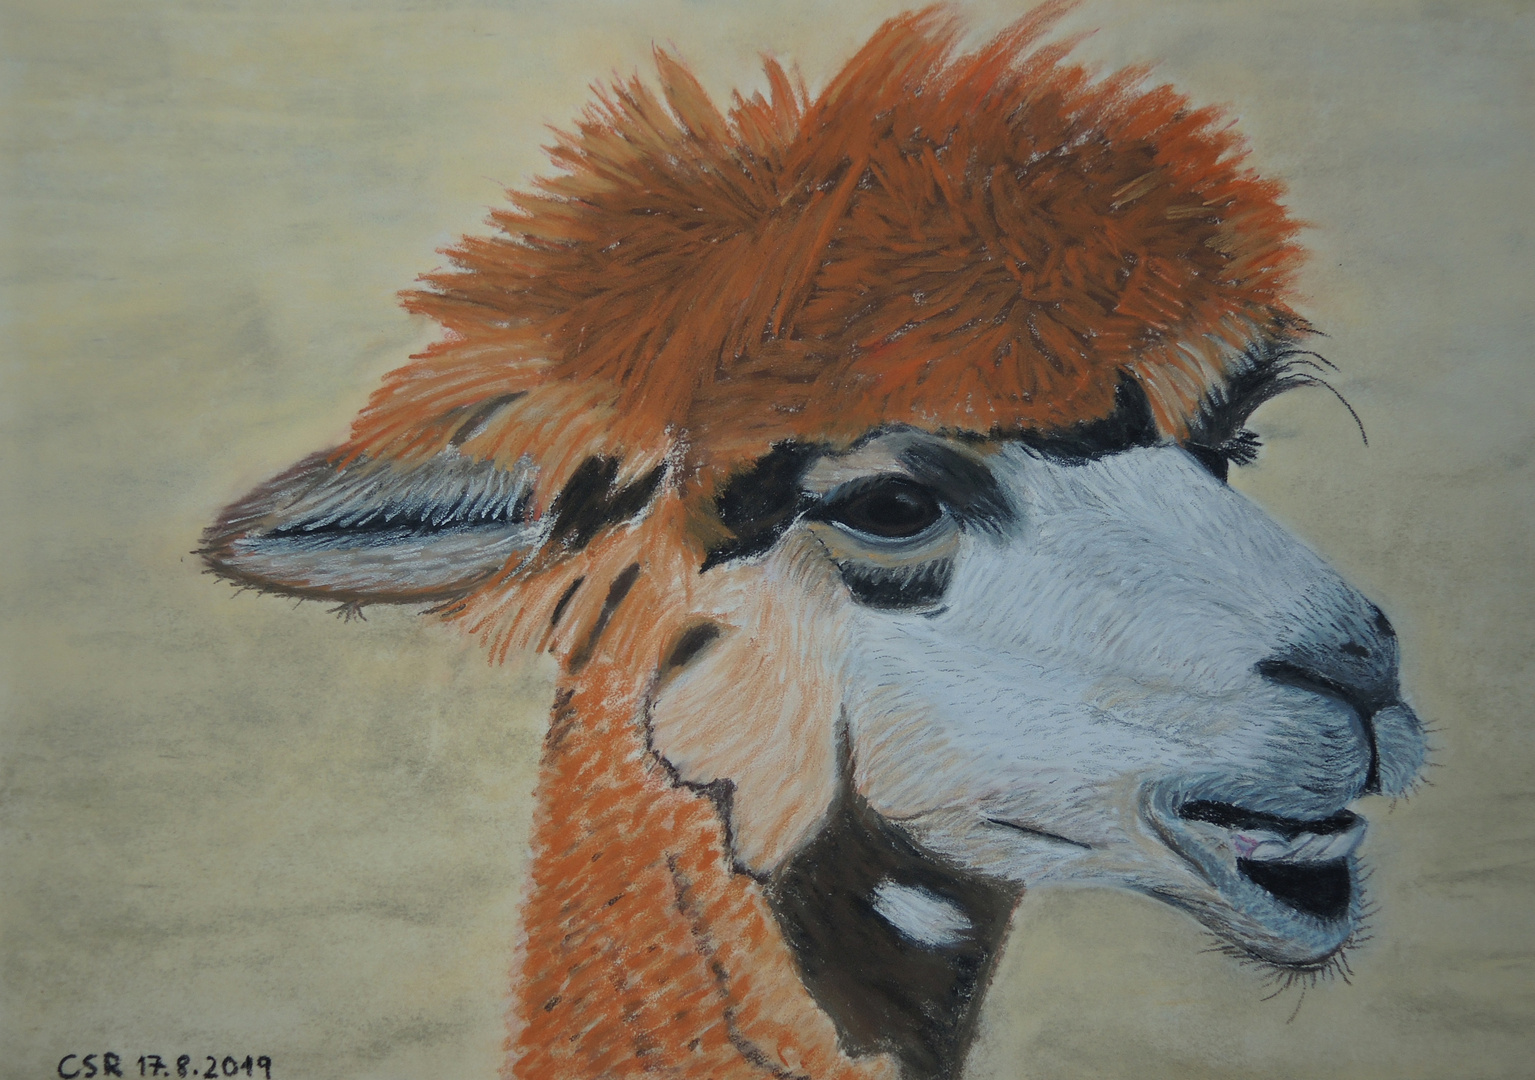 Alpaka-Porträt - mit Pastellkreide gemalt